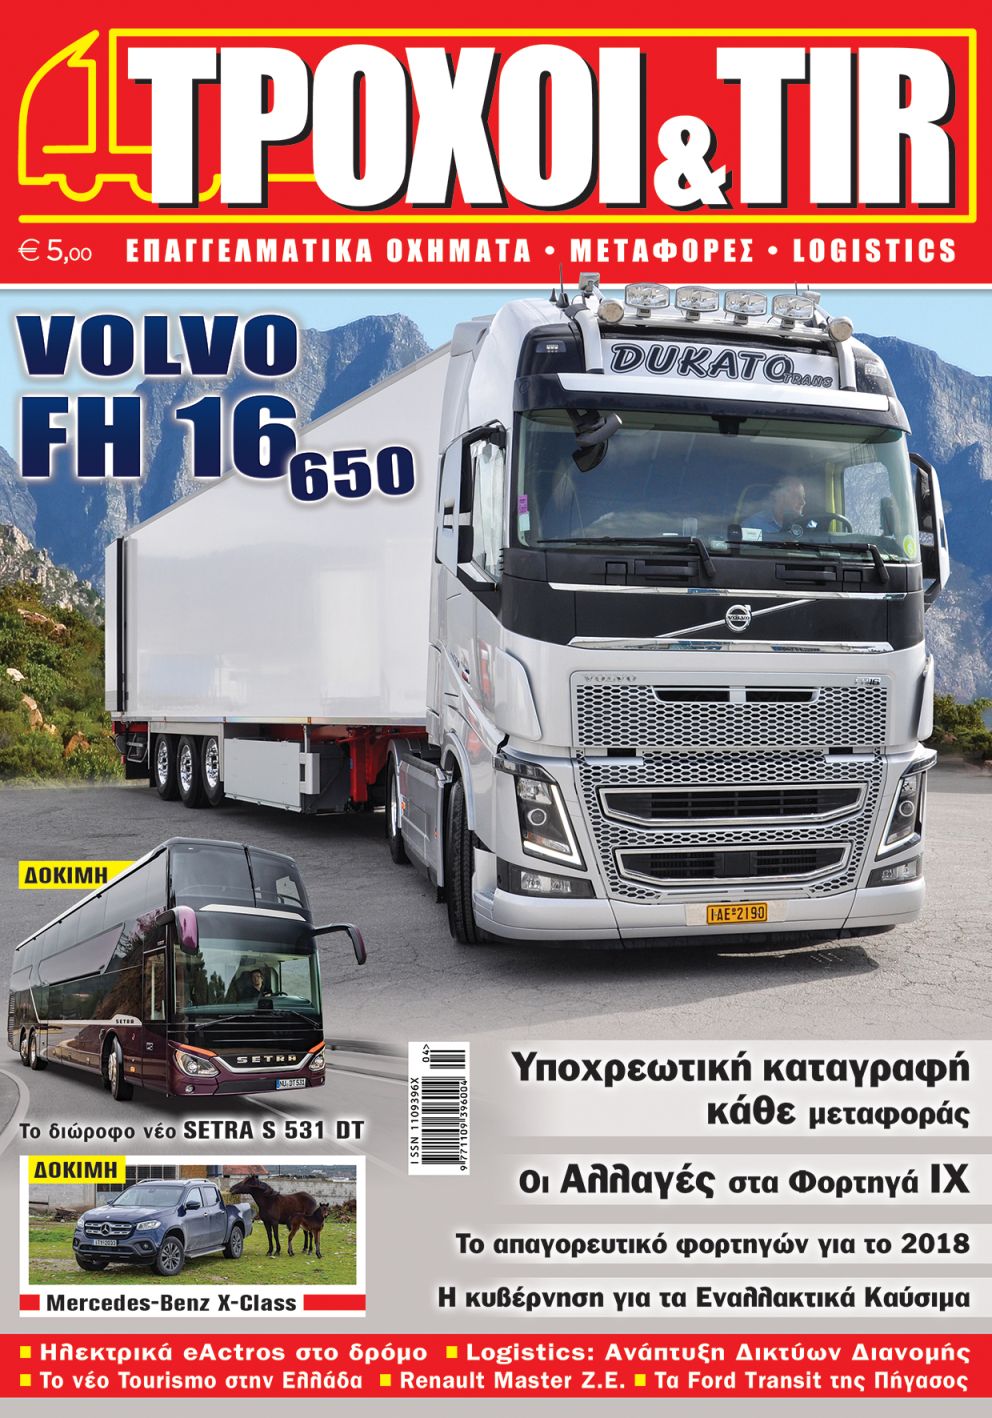 Troxoikaitir issue 360 april 2018 cover